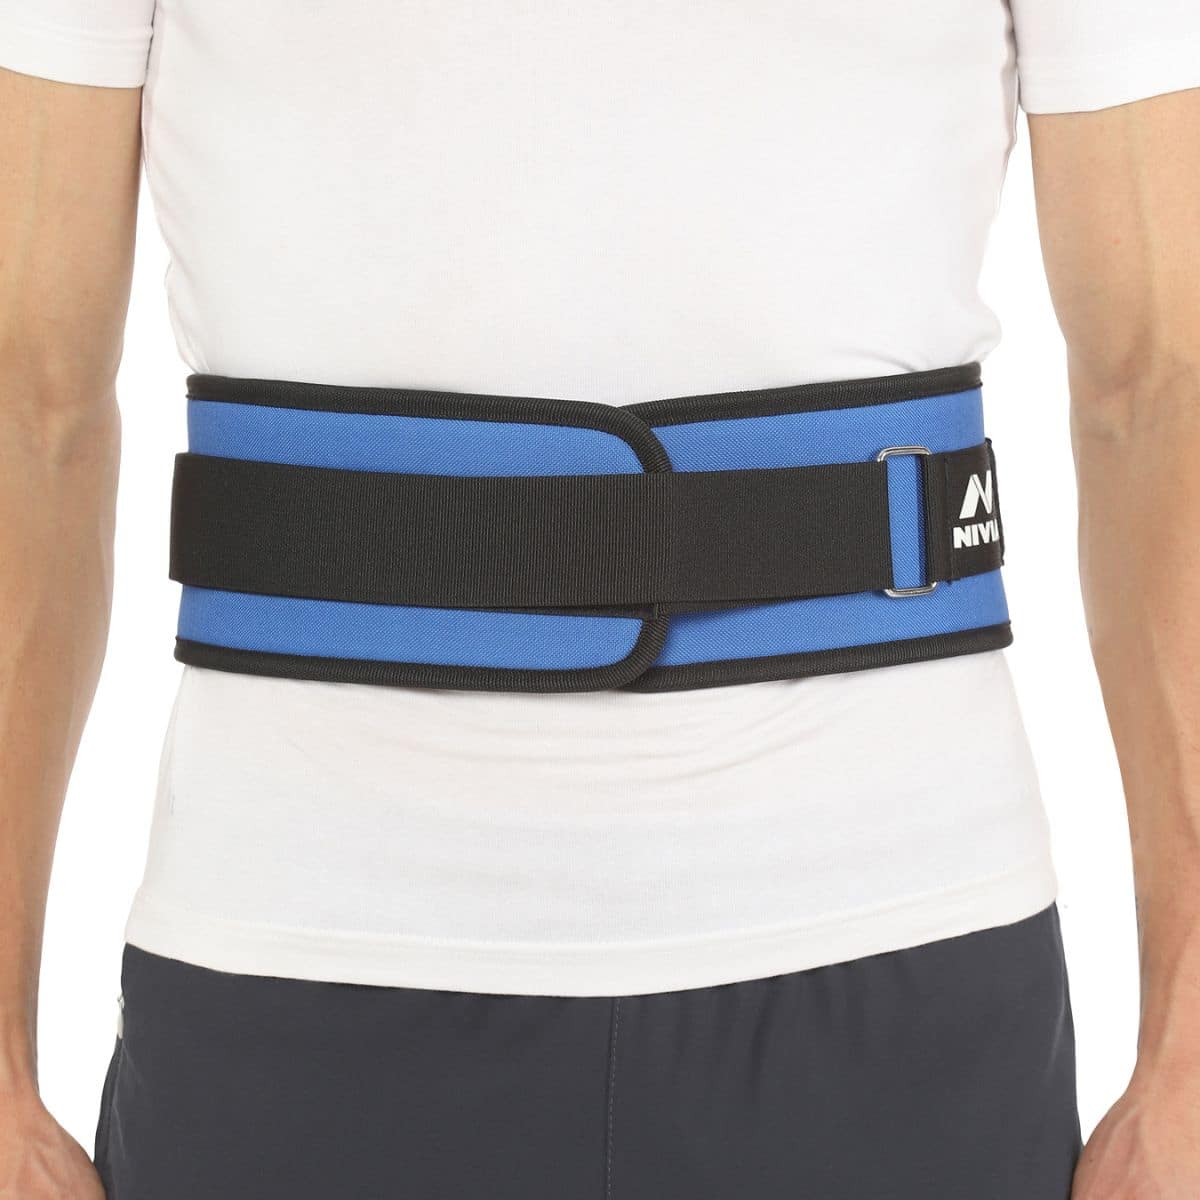 https://www.sportswing.in/wp-content/uploads/2019/03/Nivia-Weight-Lifting-Belt-Gym-2.jpg